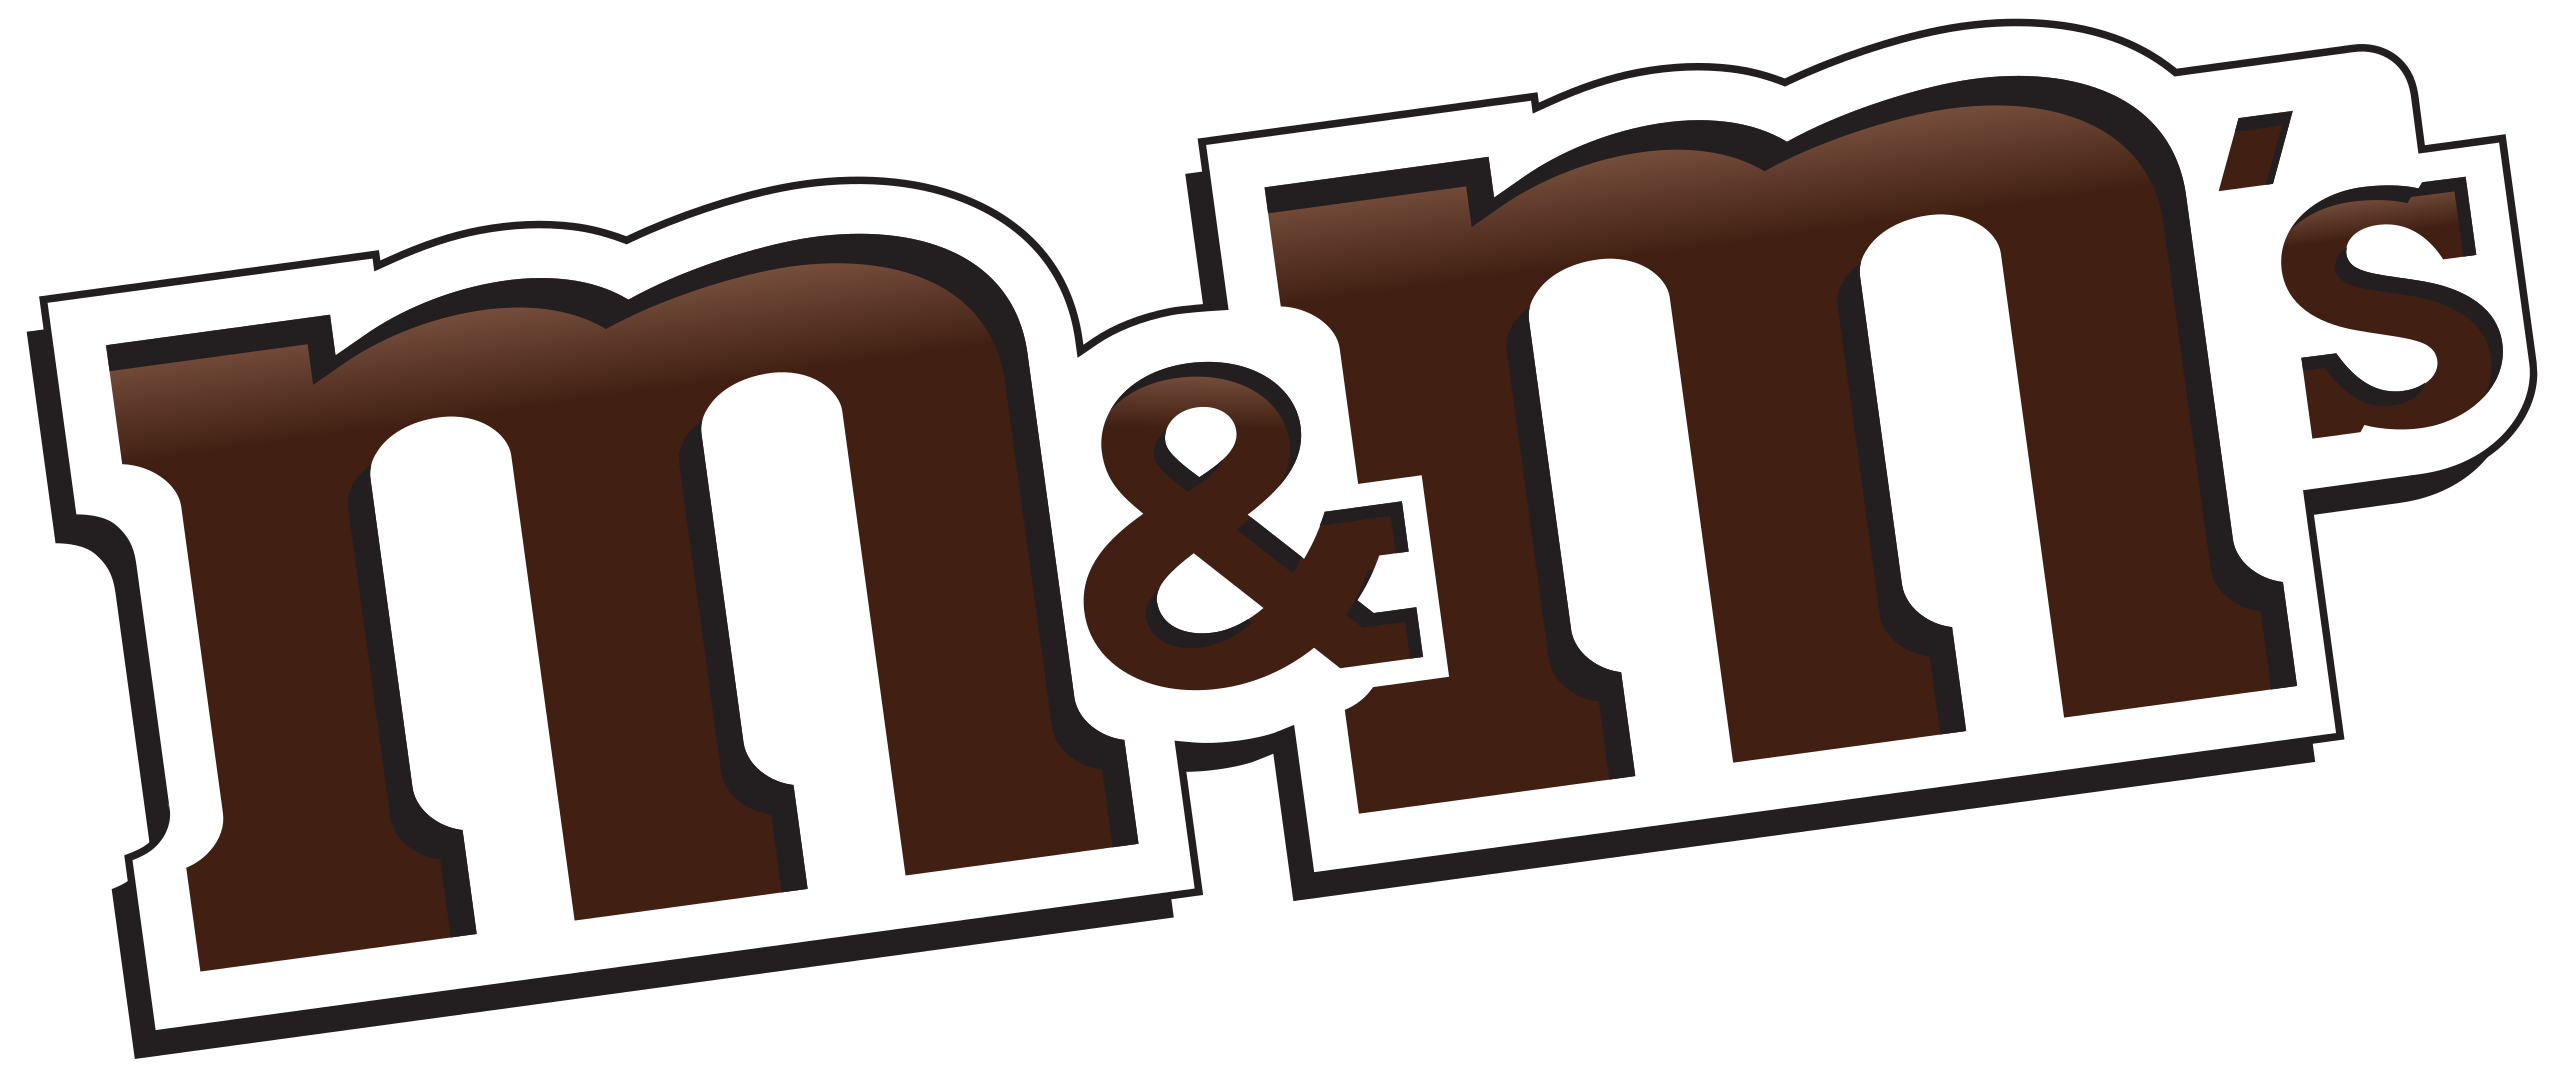 M_M_s_logo.svg